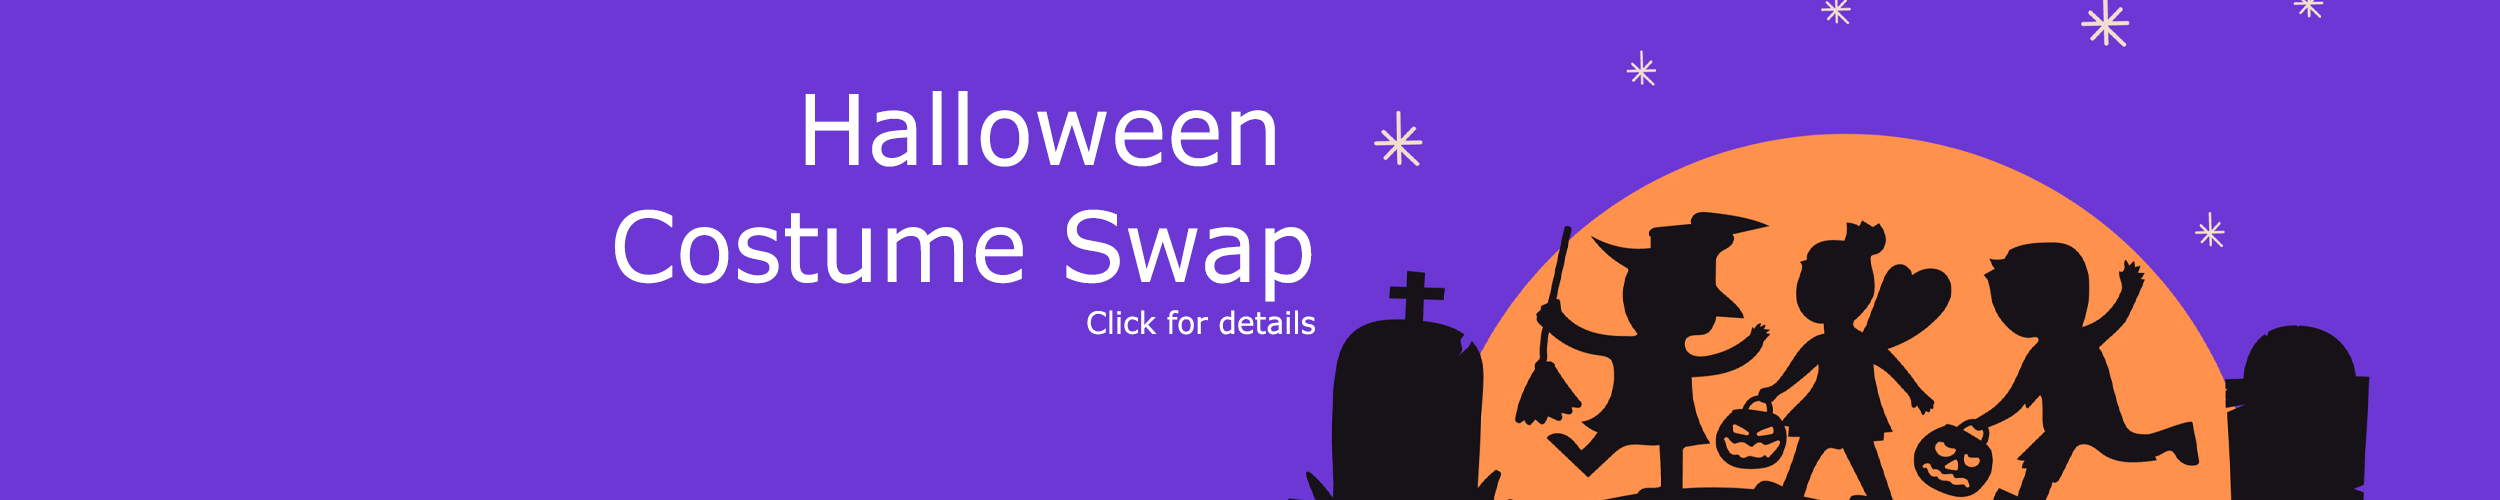 Image of silhouette of kids dressed in Halloween costumes "Halloween Costume Swap"